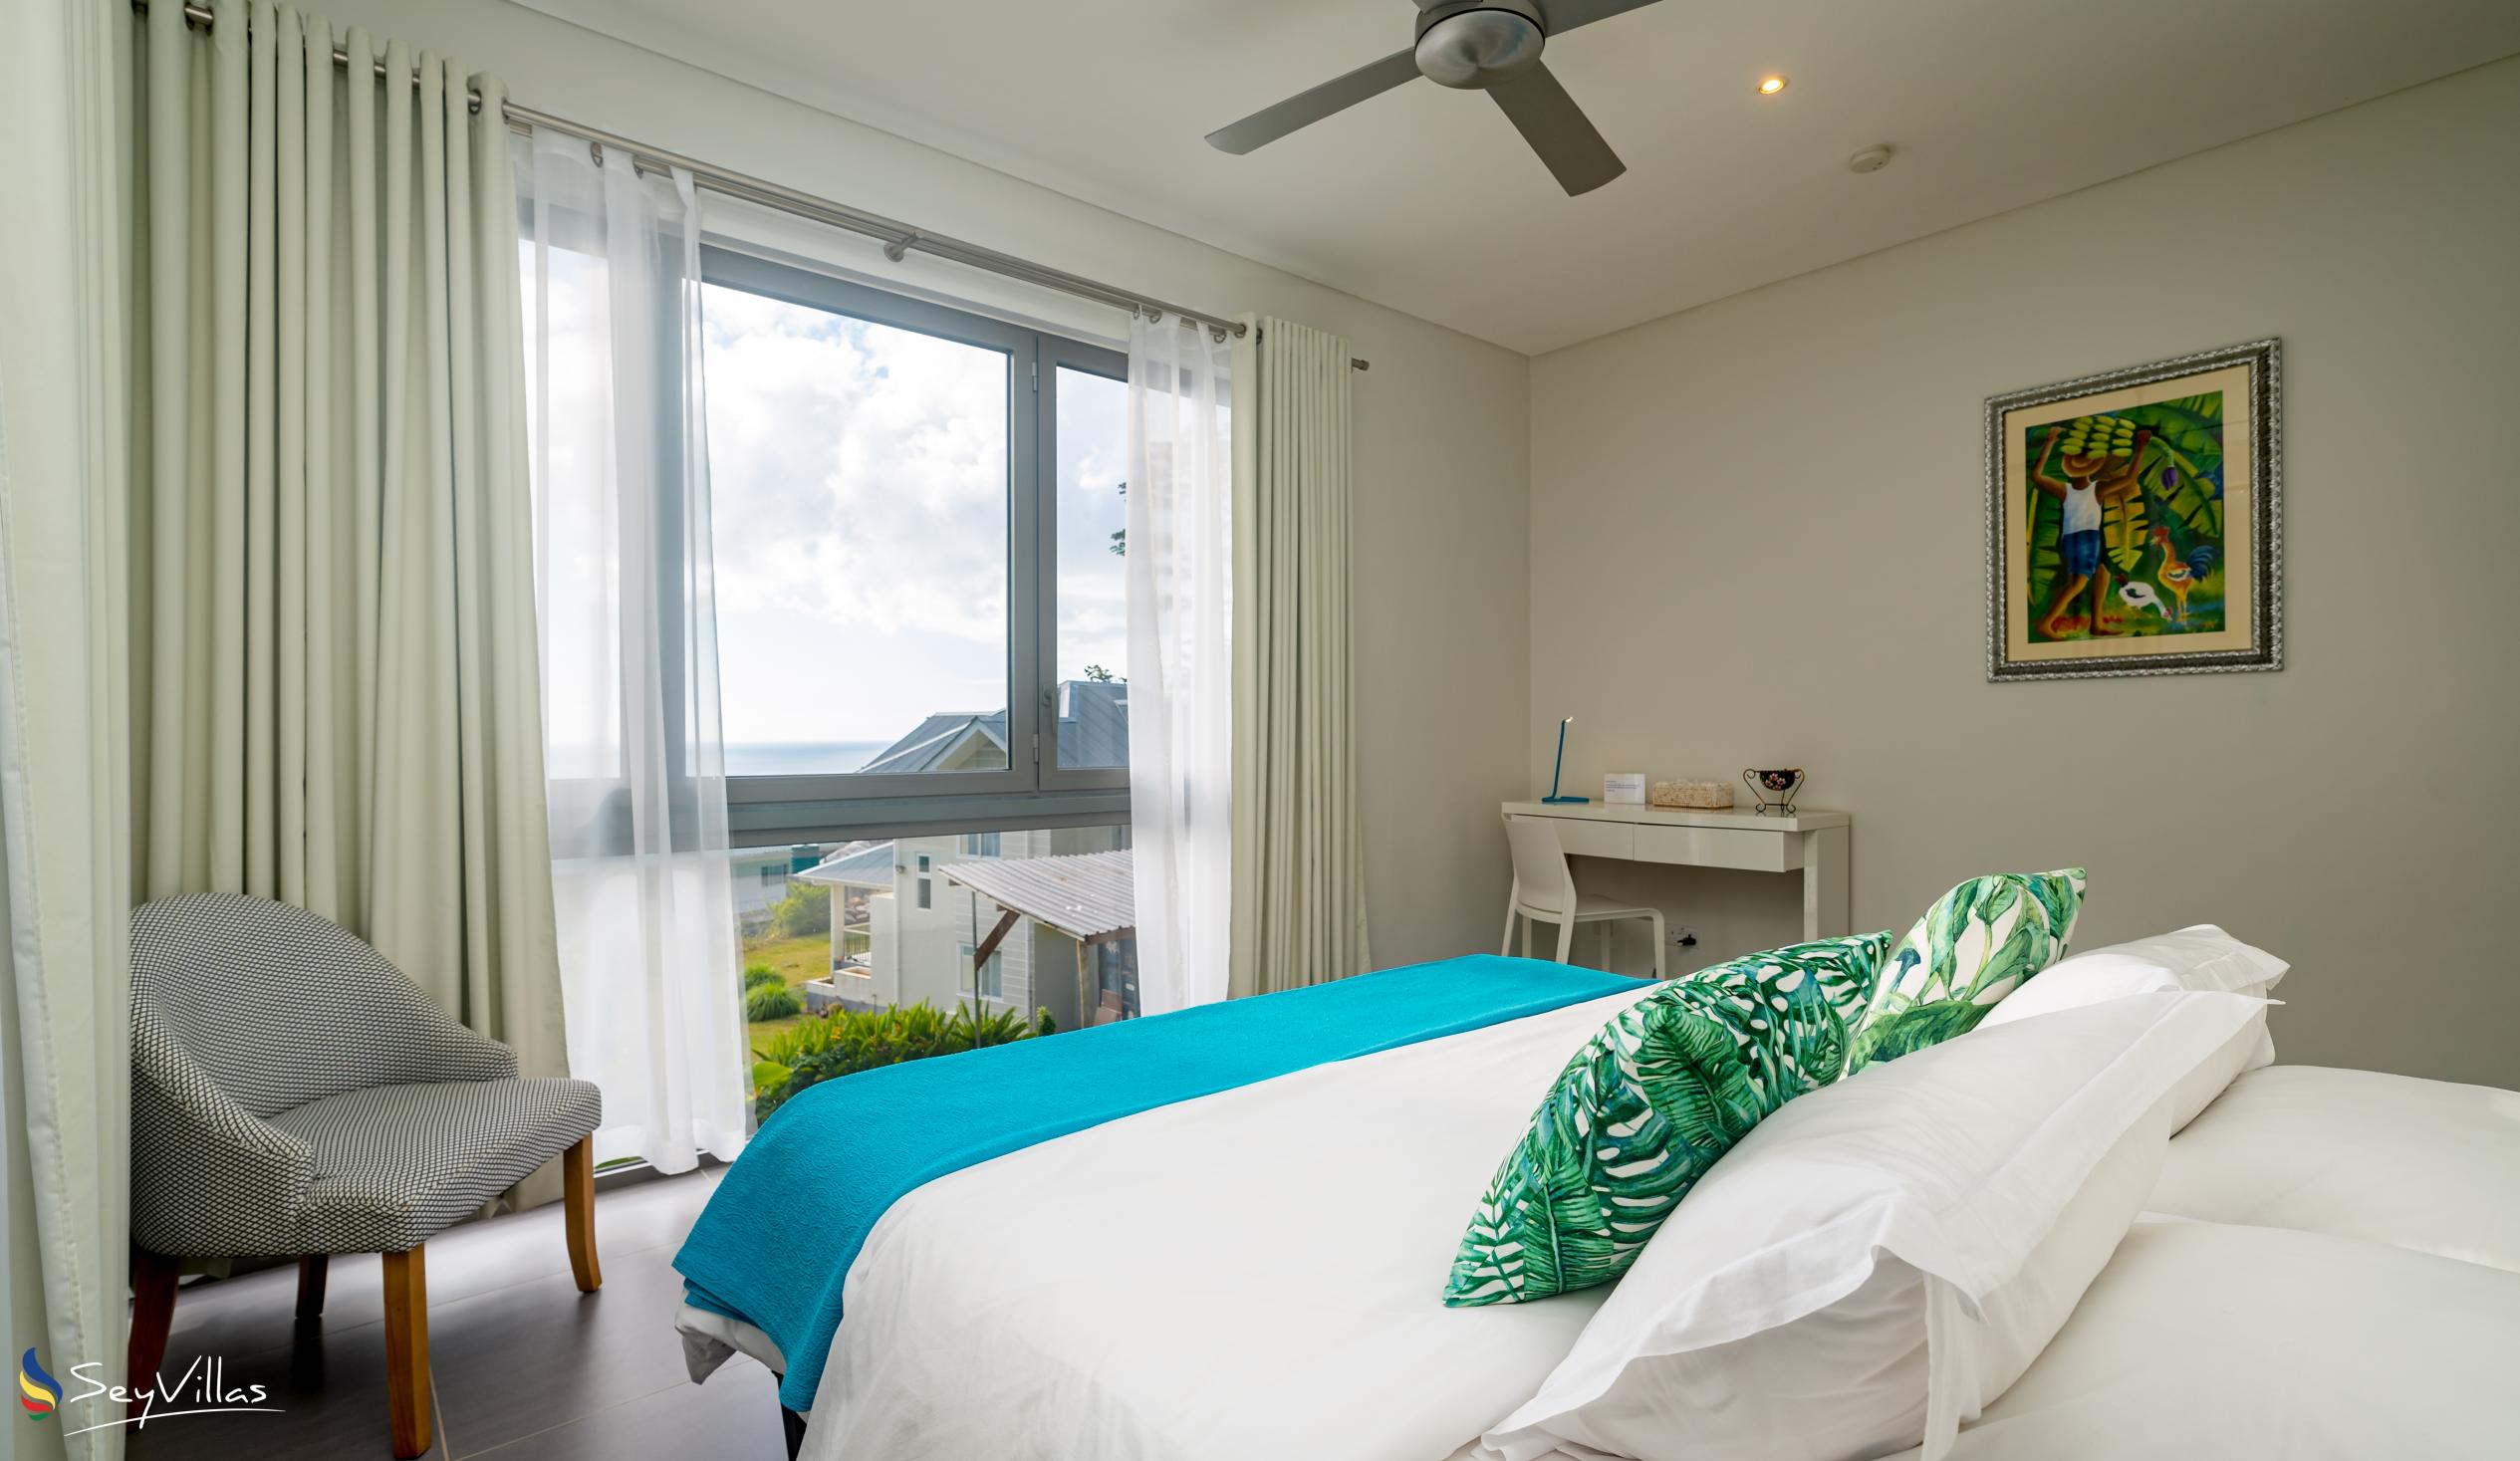 Photo 60: Roz Avel Villa - 2-Bedroom Villa - Mahé (Seychelles)